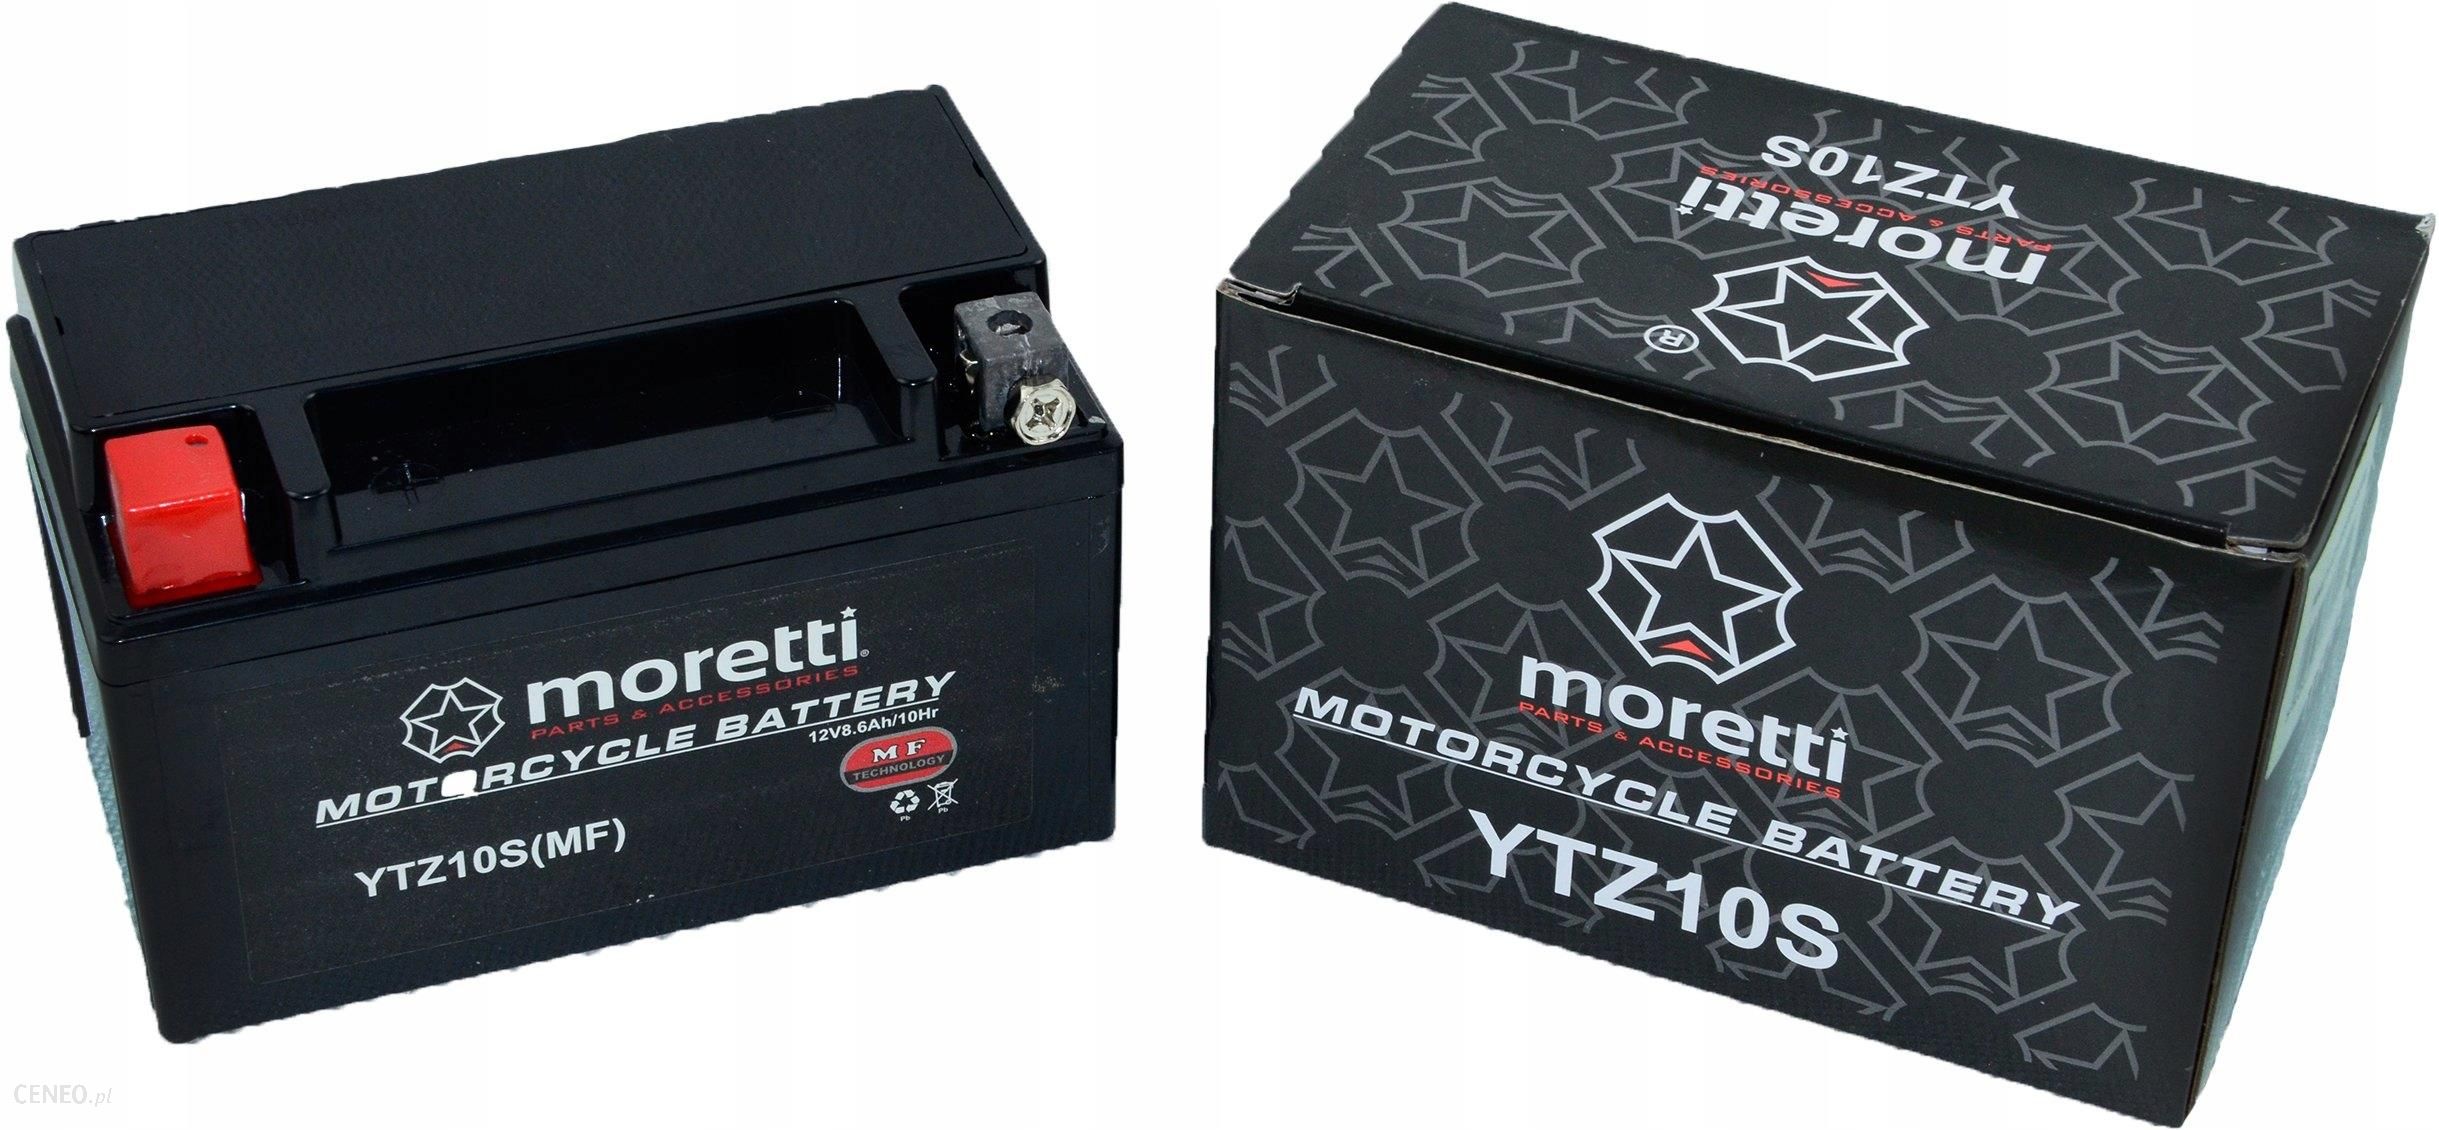 ytz10s mf motorcycle batteries/motorcycle parts 12v8.6ah